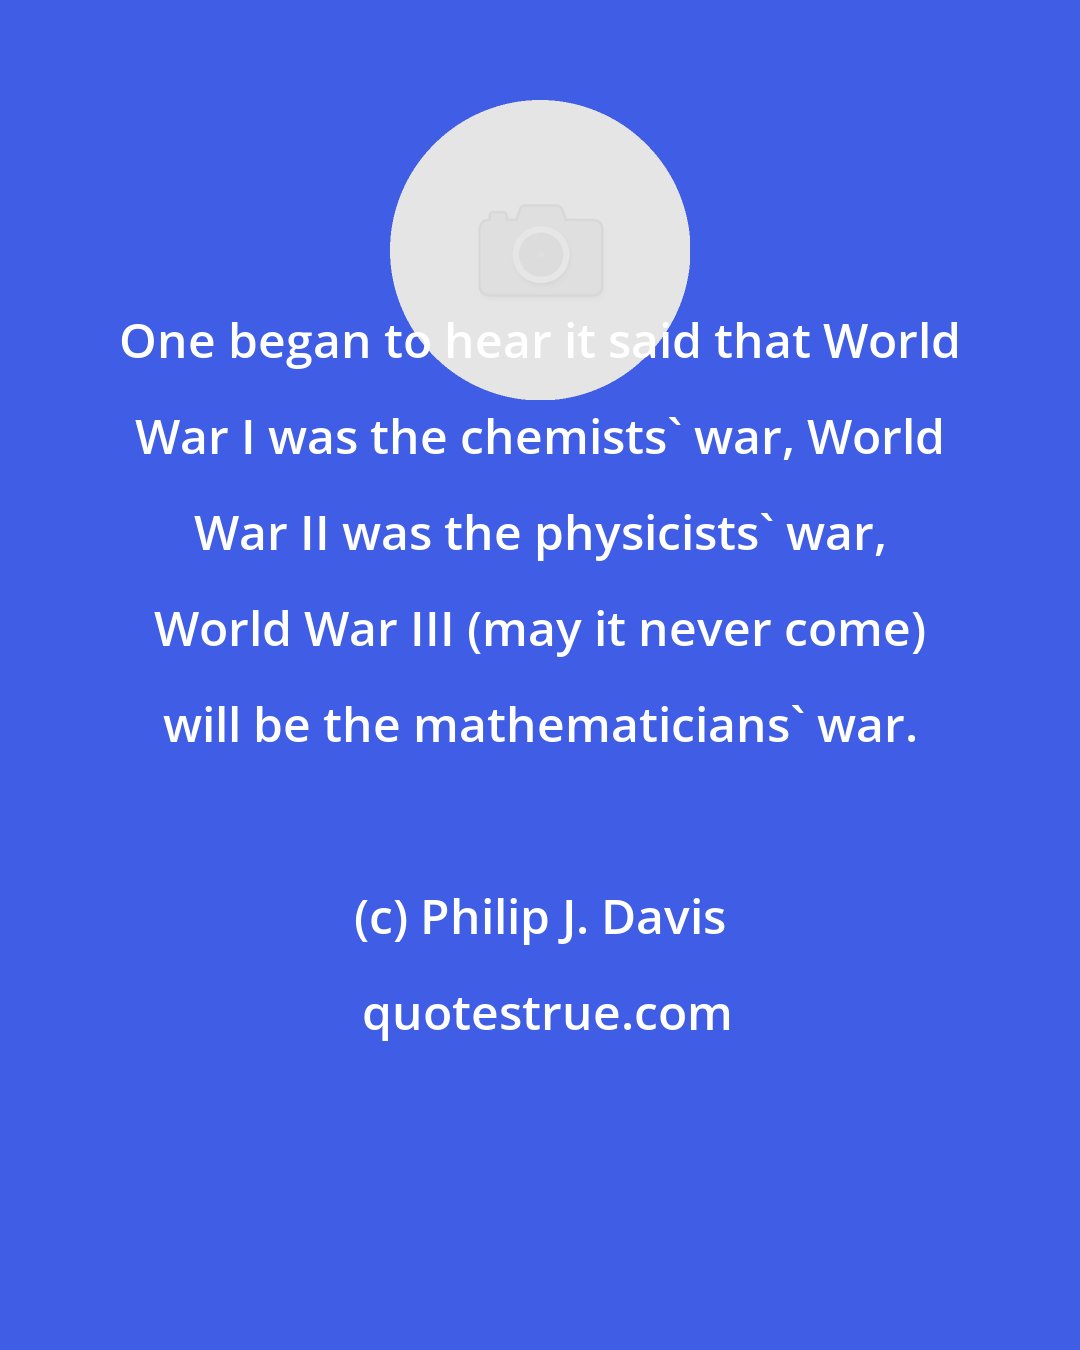 Philip J. Davis: One began to hear it said that World War I was the chemists' war, World War II was the physicists' war, World War III (may it never come) will be the mathematicians' war.